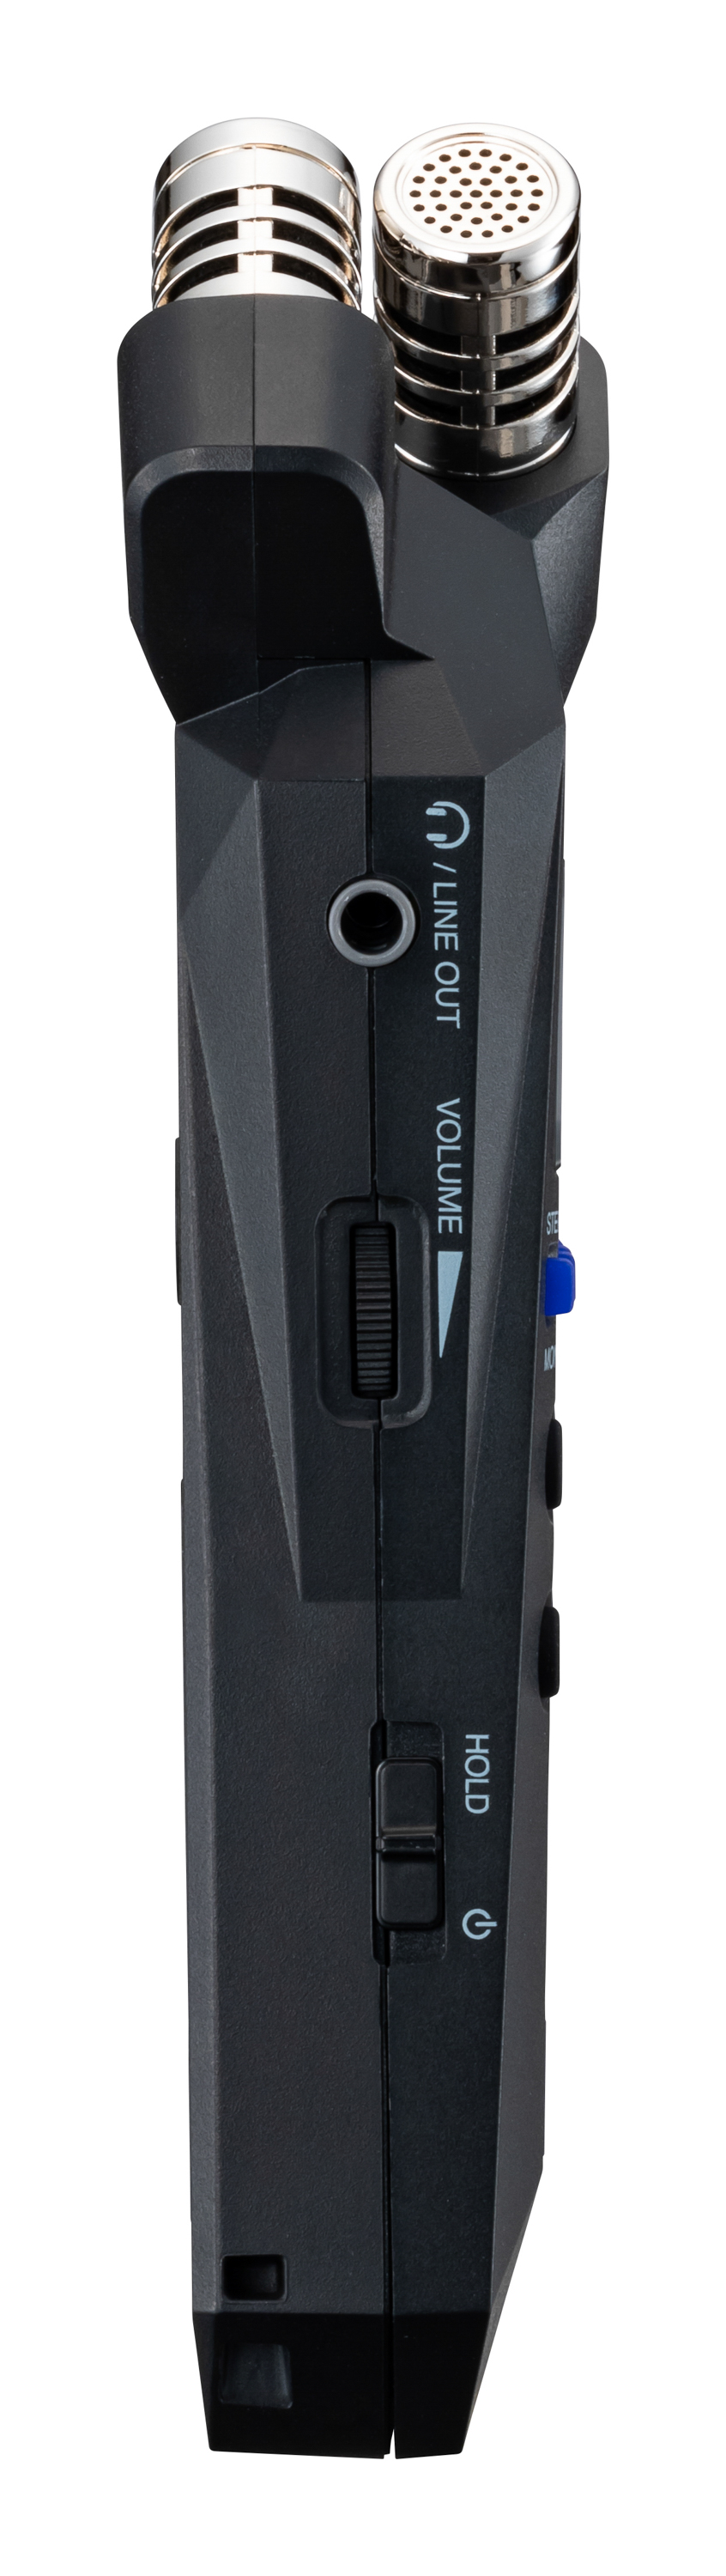 Zoom H1 Essential - Portable recorder - Variation 1